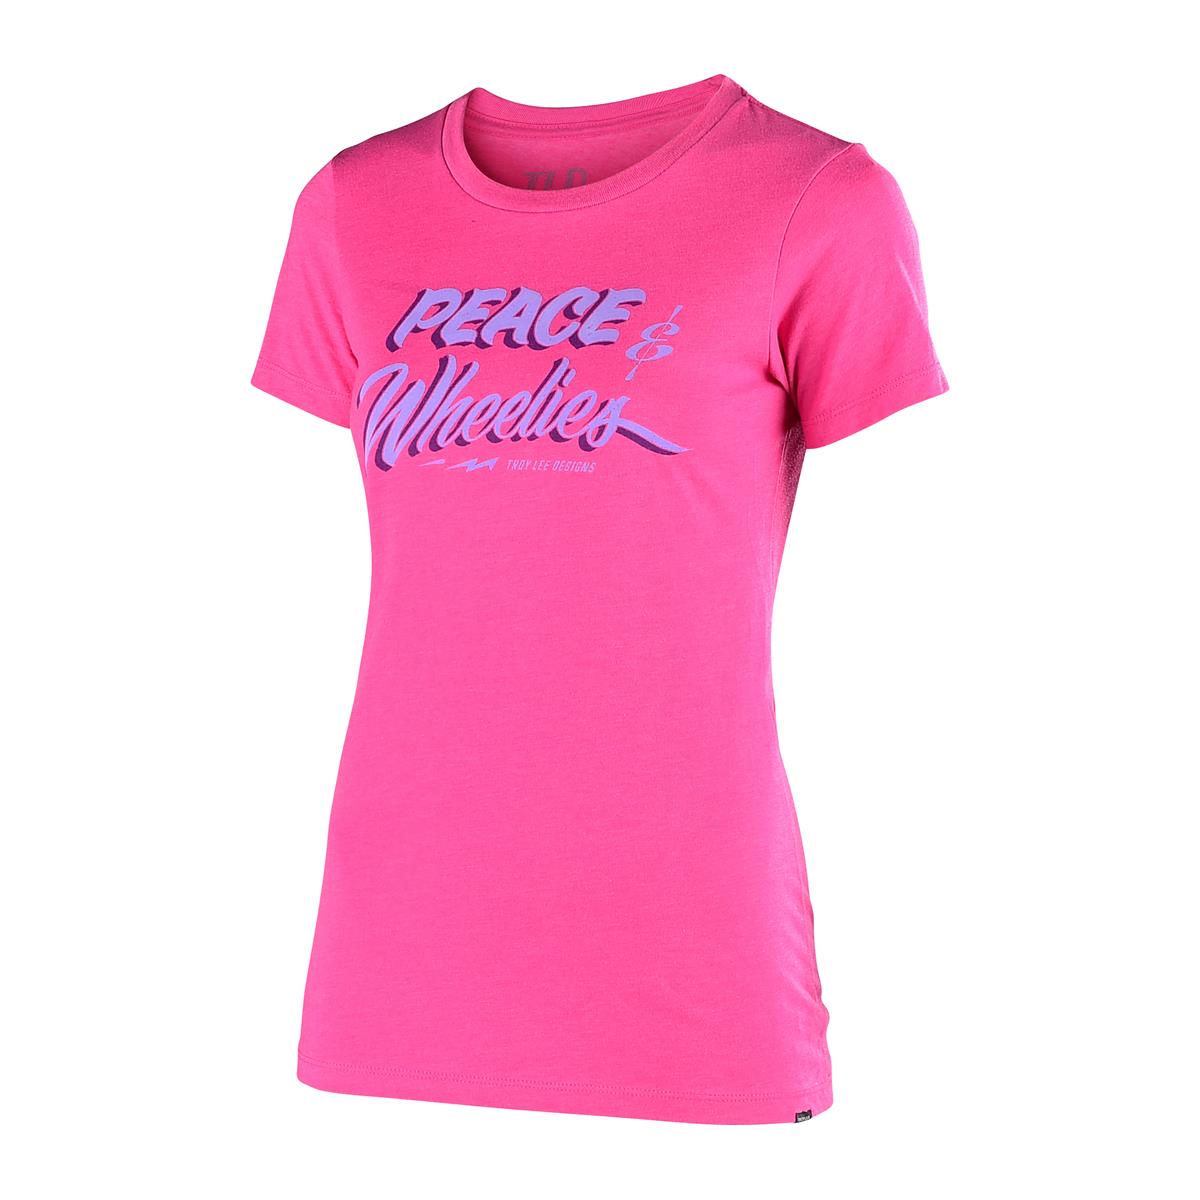 Troy Lee Designs Femme T-Shirt Peace & Wheelies Raspberry